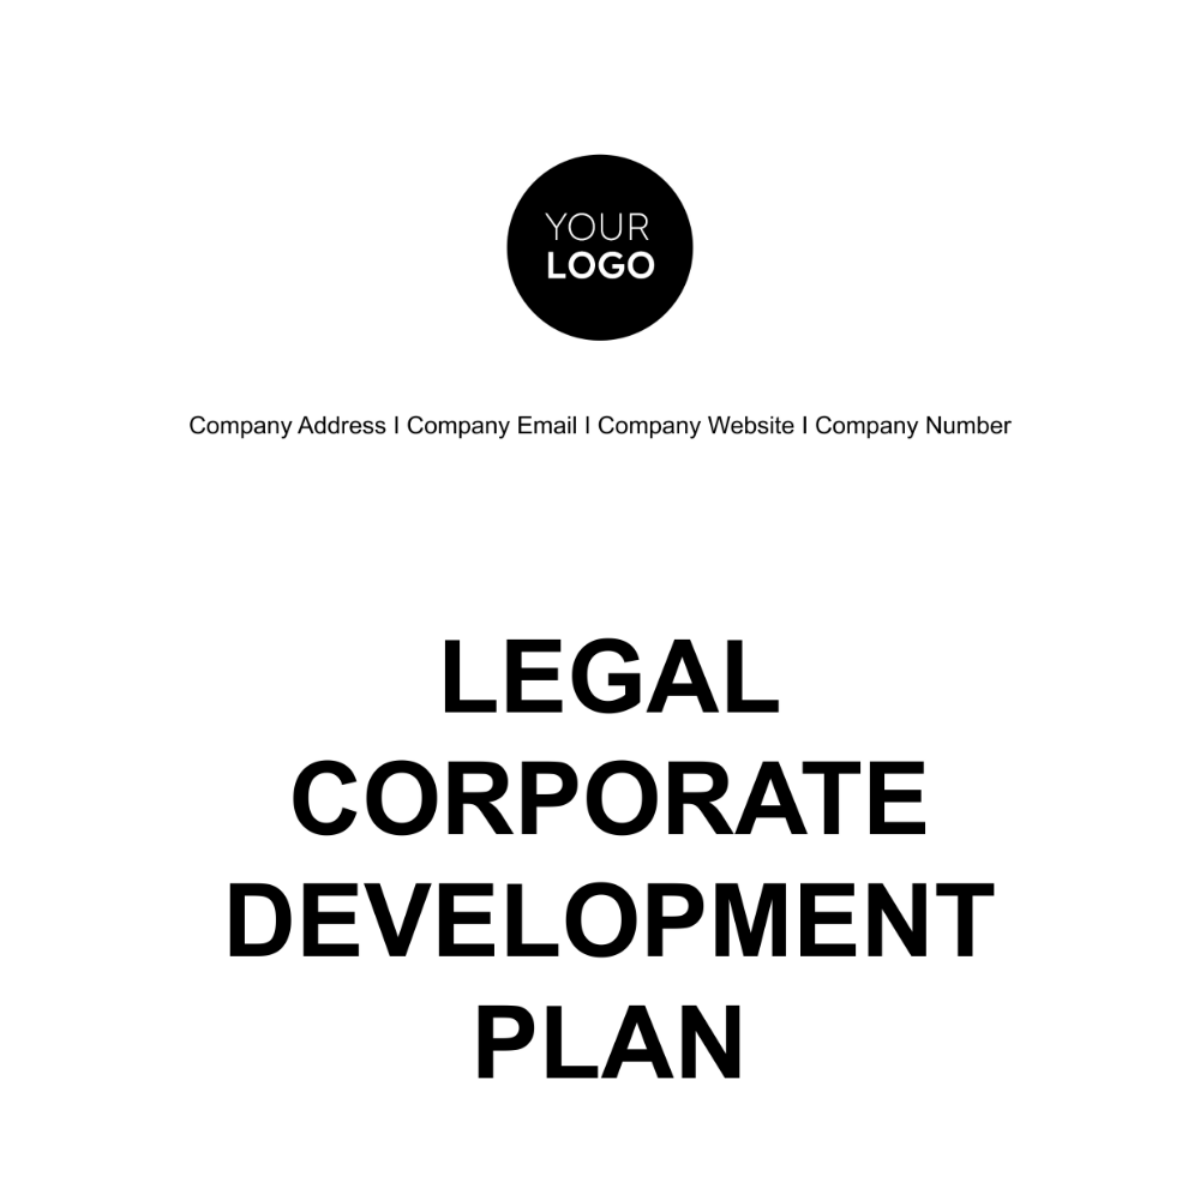 Free Legal Corporate Development Plan Template